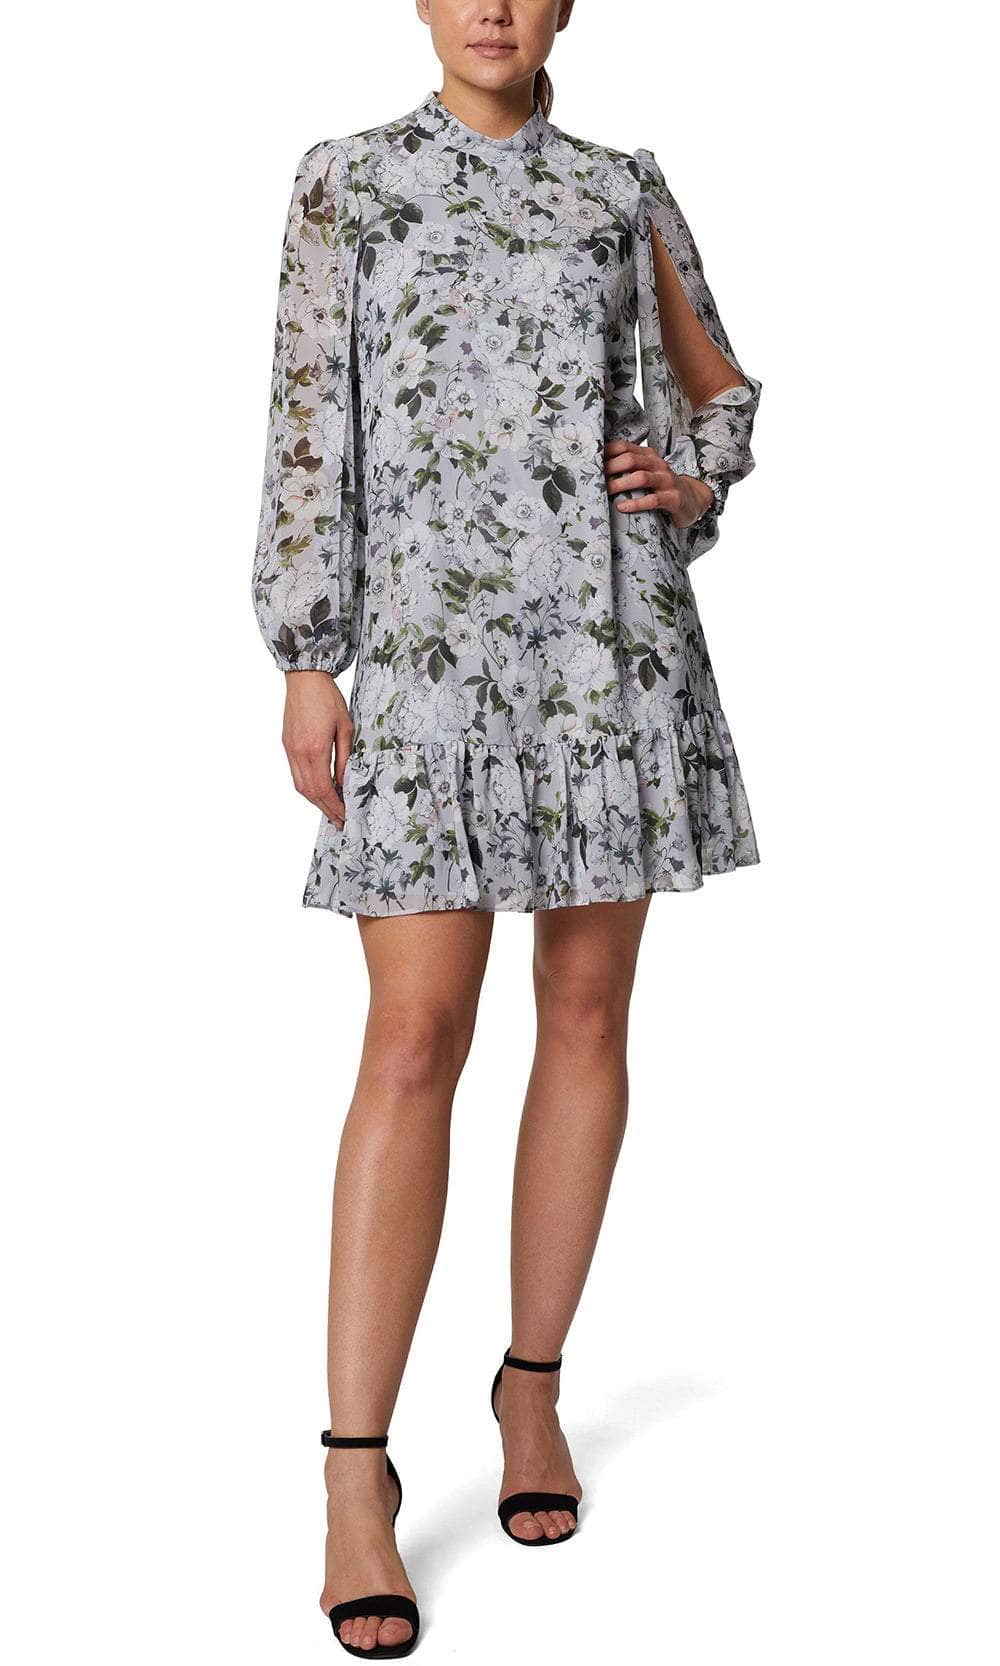 Laundry HU07D67 - Floral Split Sleeve Casual Dress
